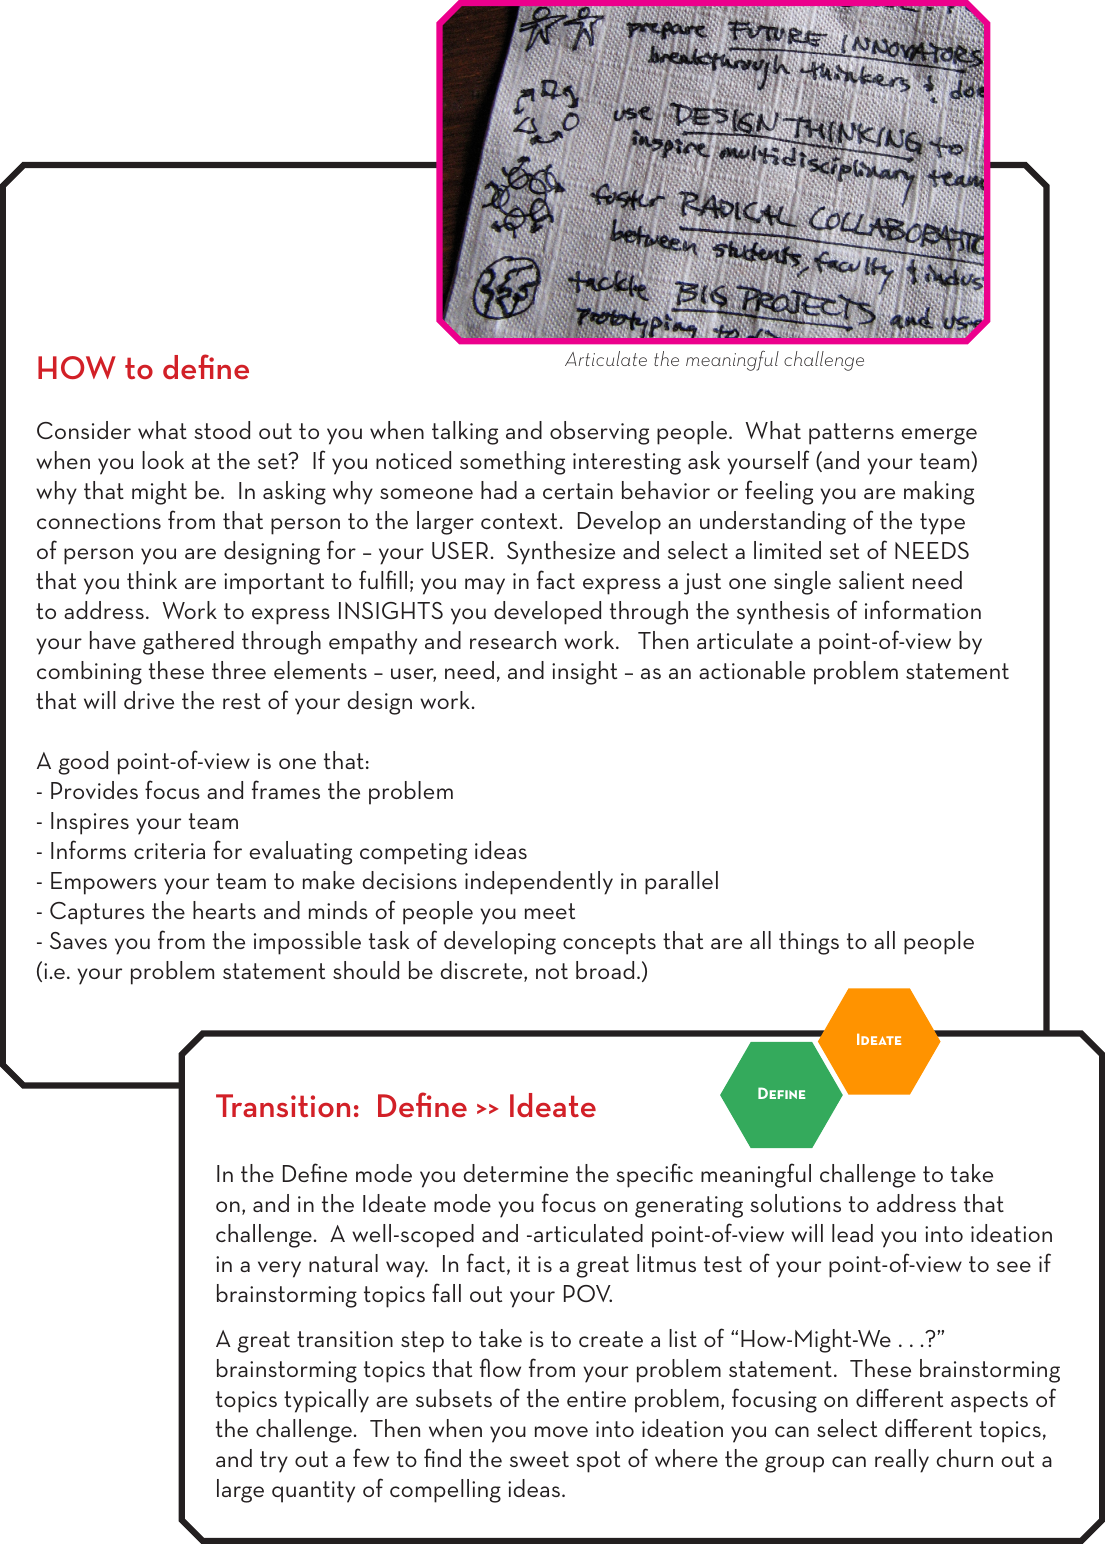 Page 5 of 11 - Stanford-d-school Design Process Mini-Guide V1 English PDF